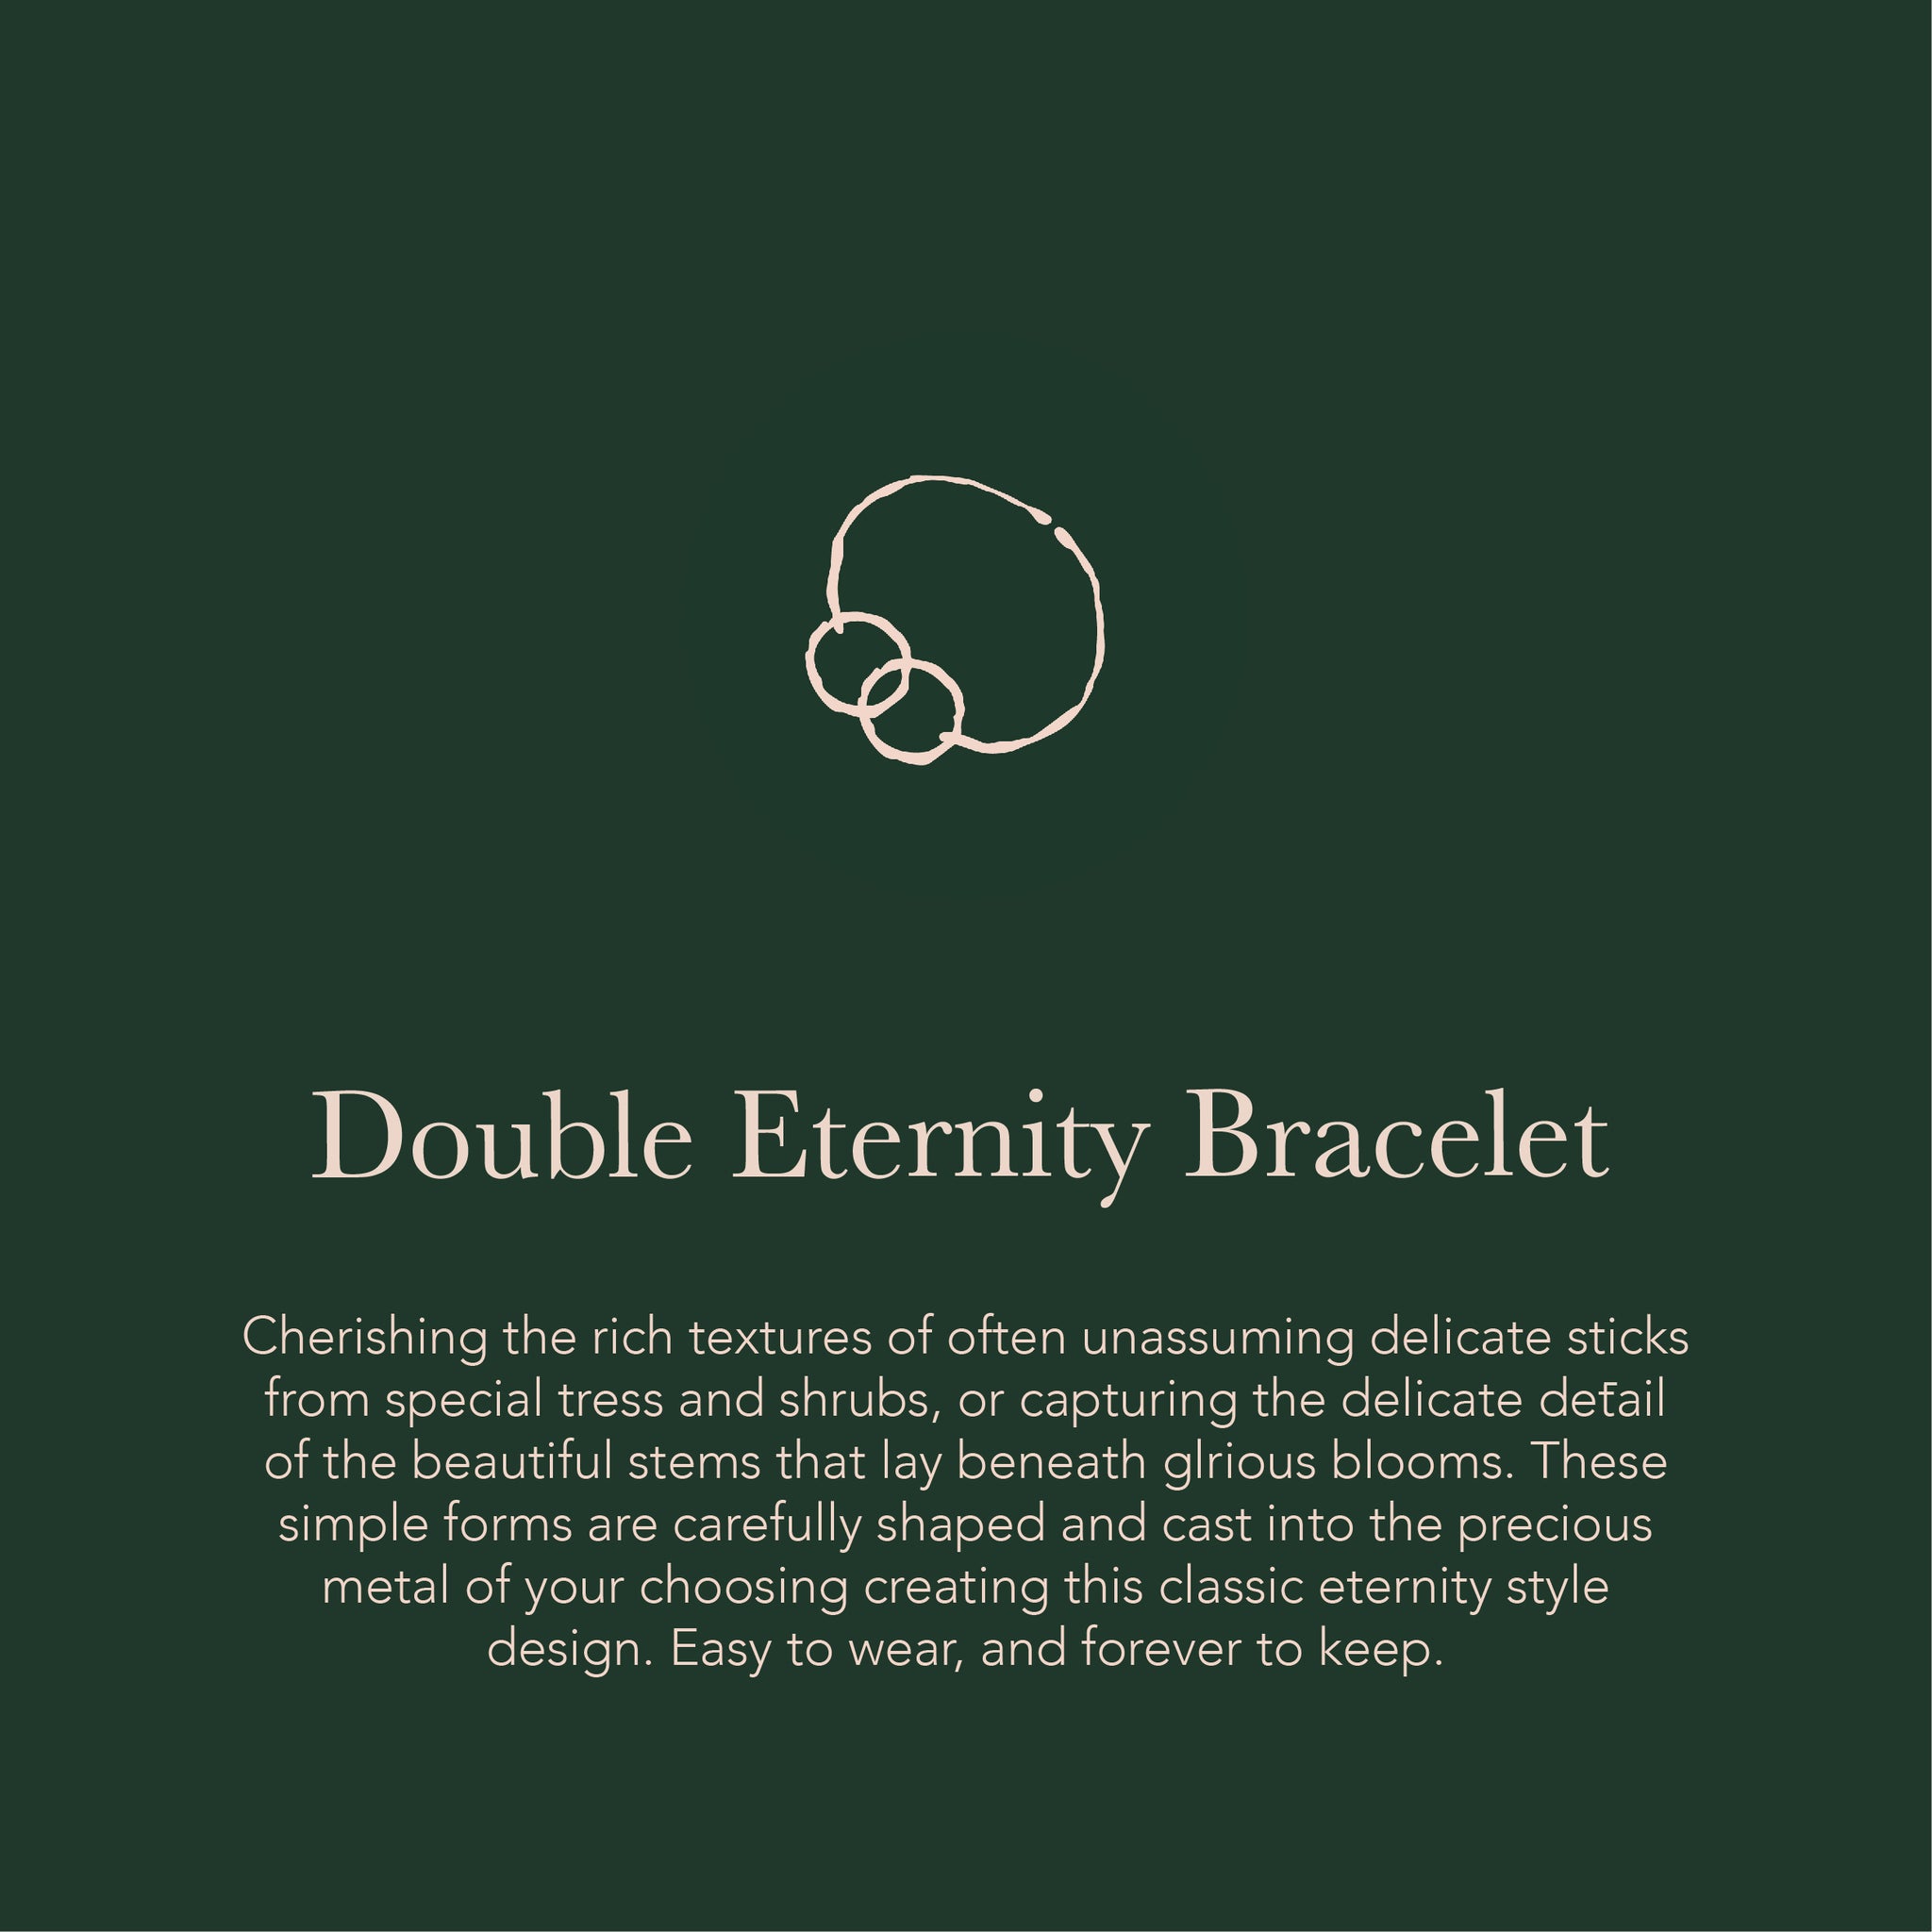 Double Eternity Bracelet - Create